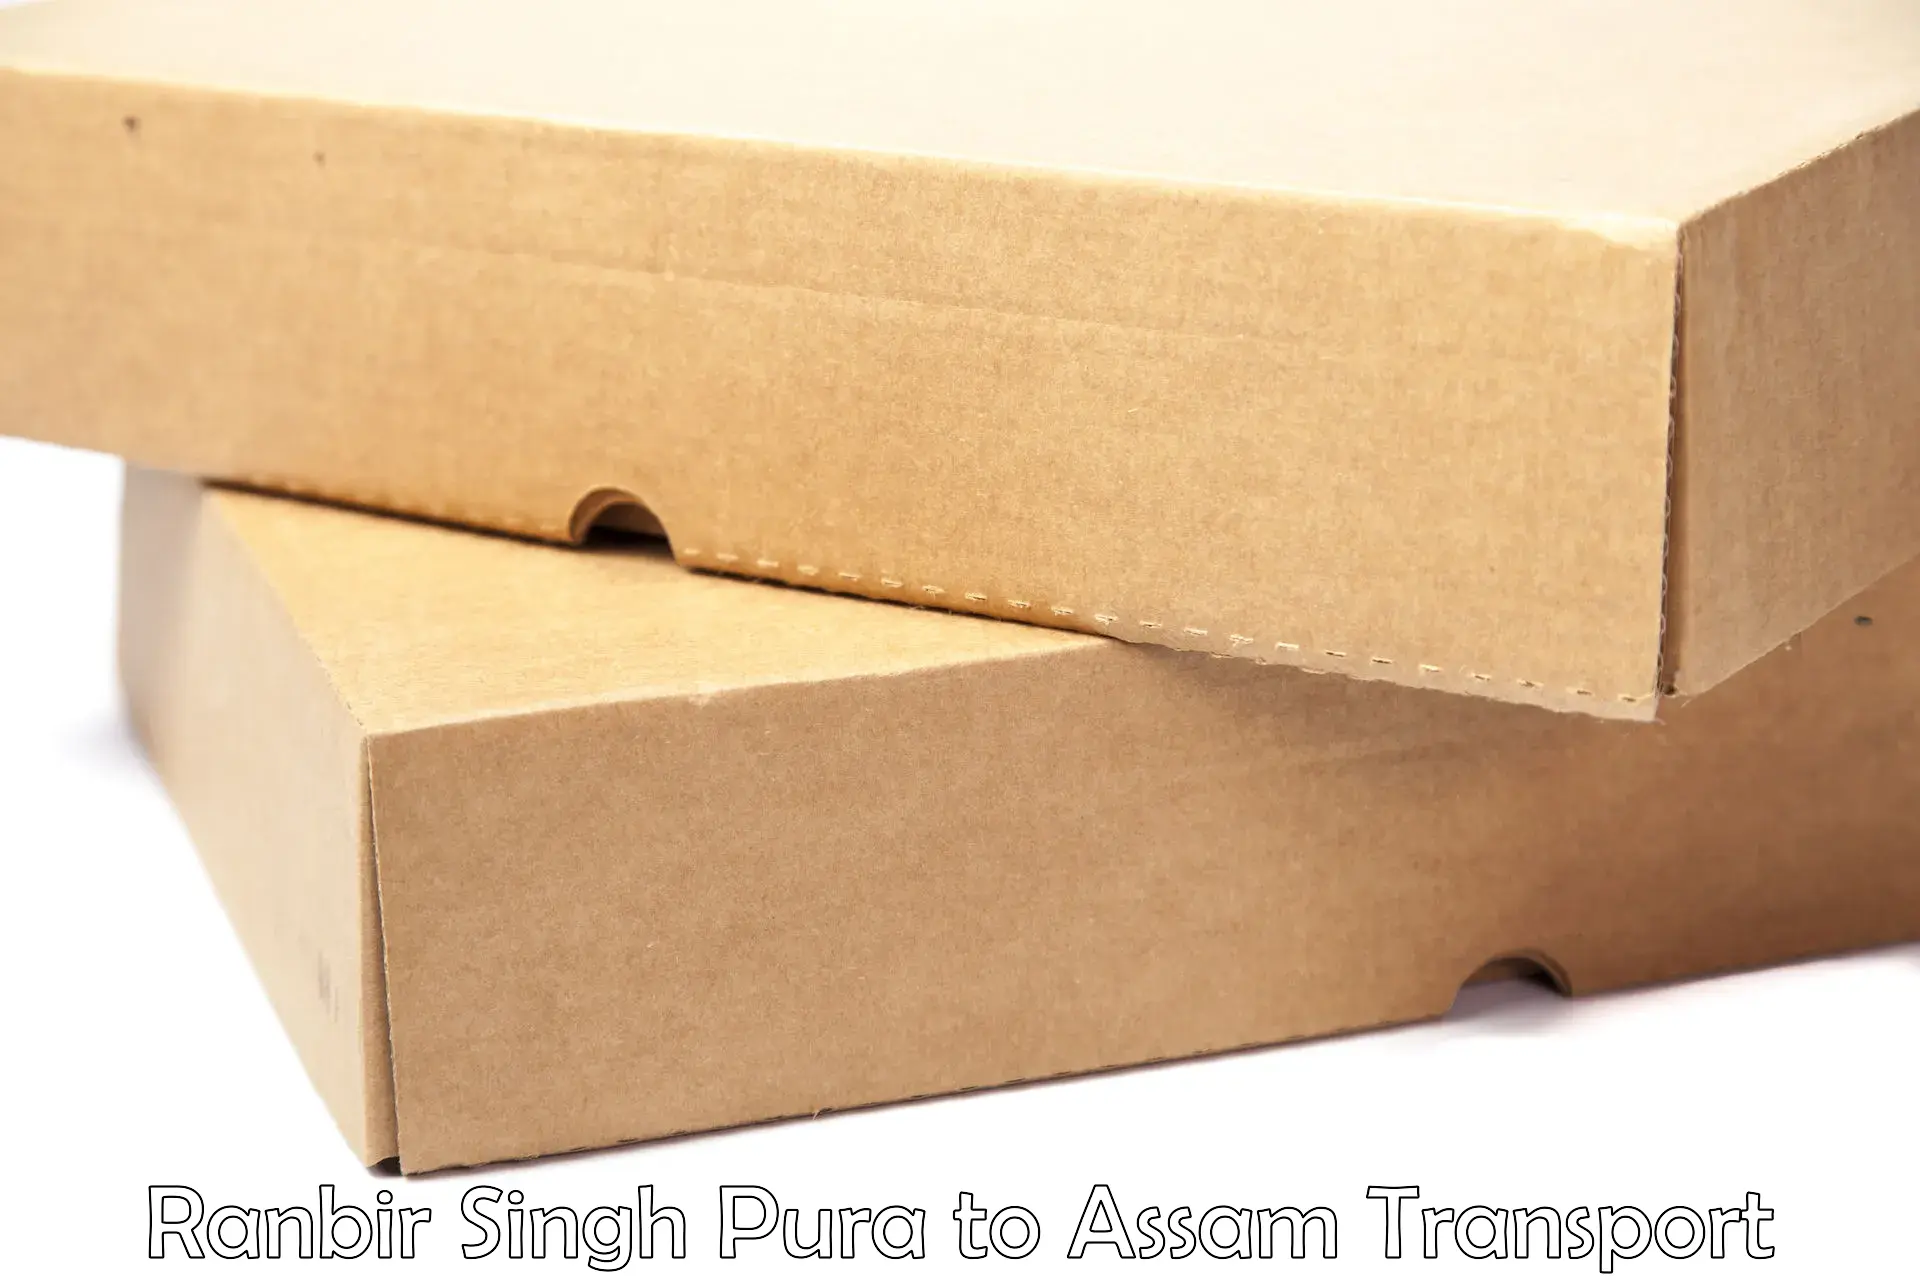 Transport shared services Ranbir Singh Pura to Assam